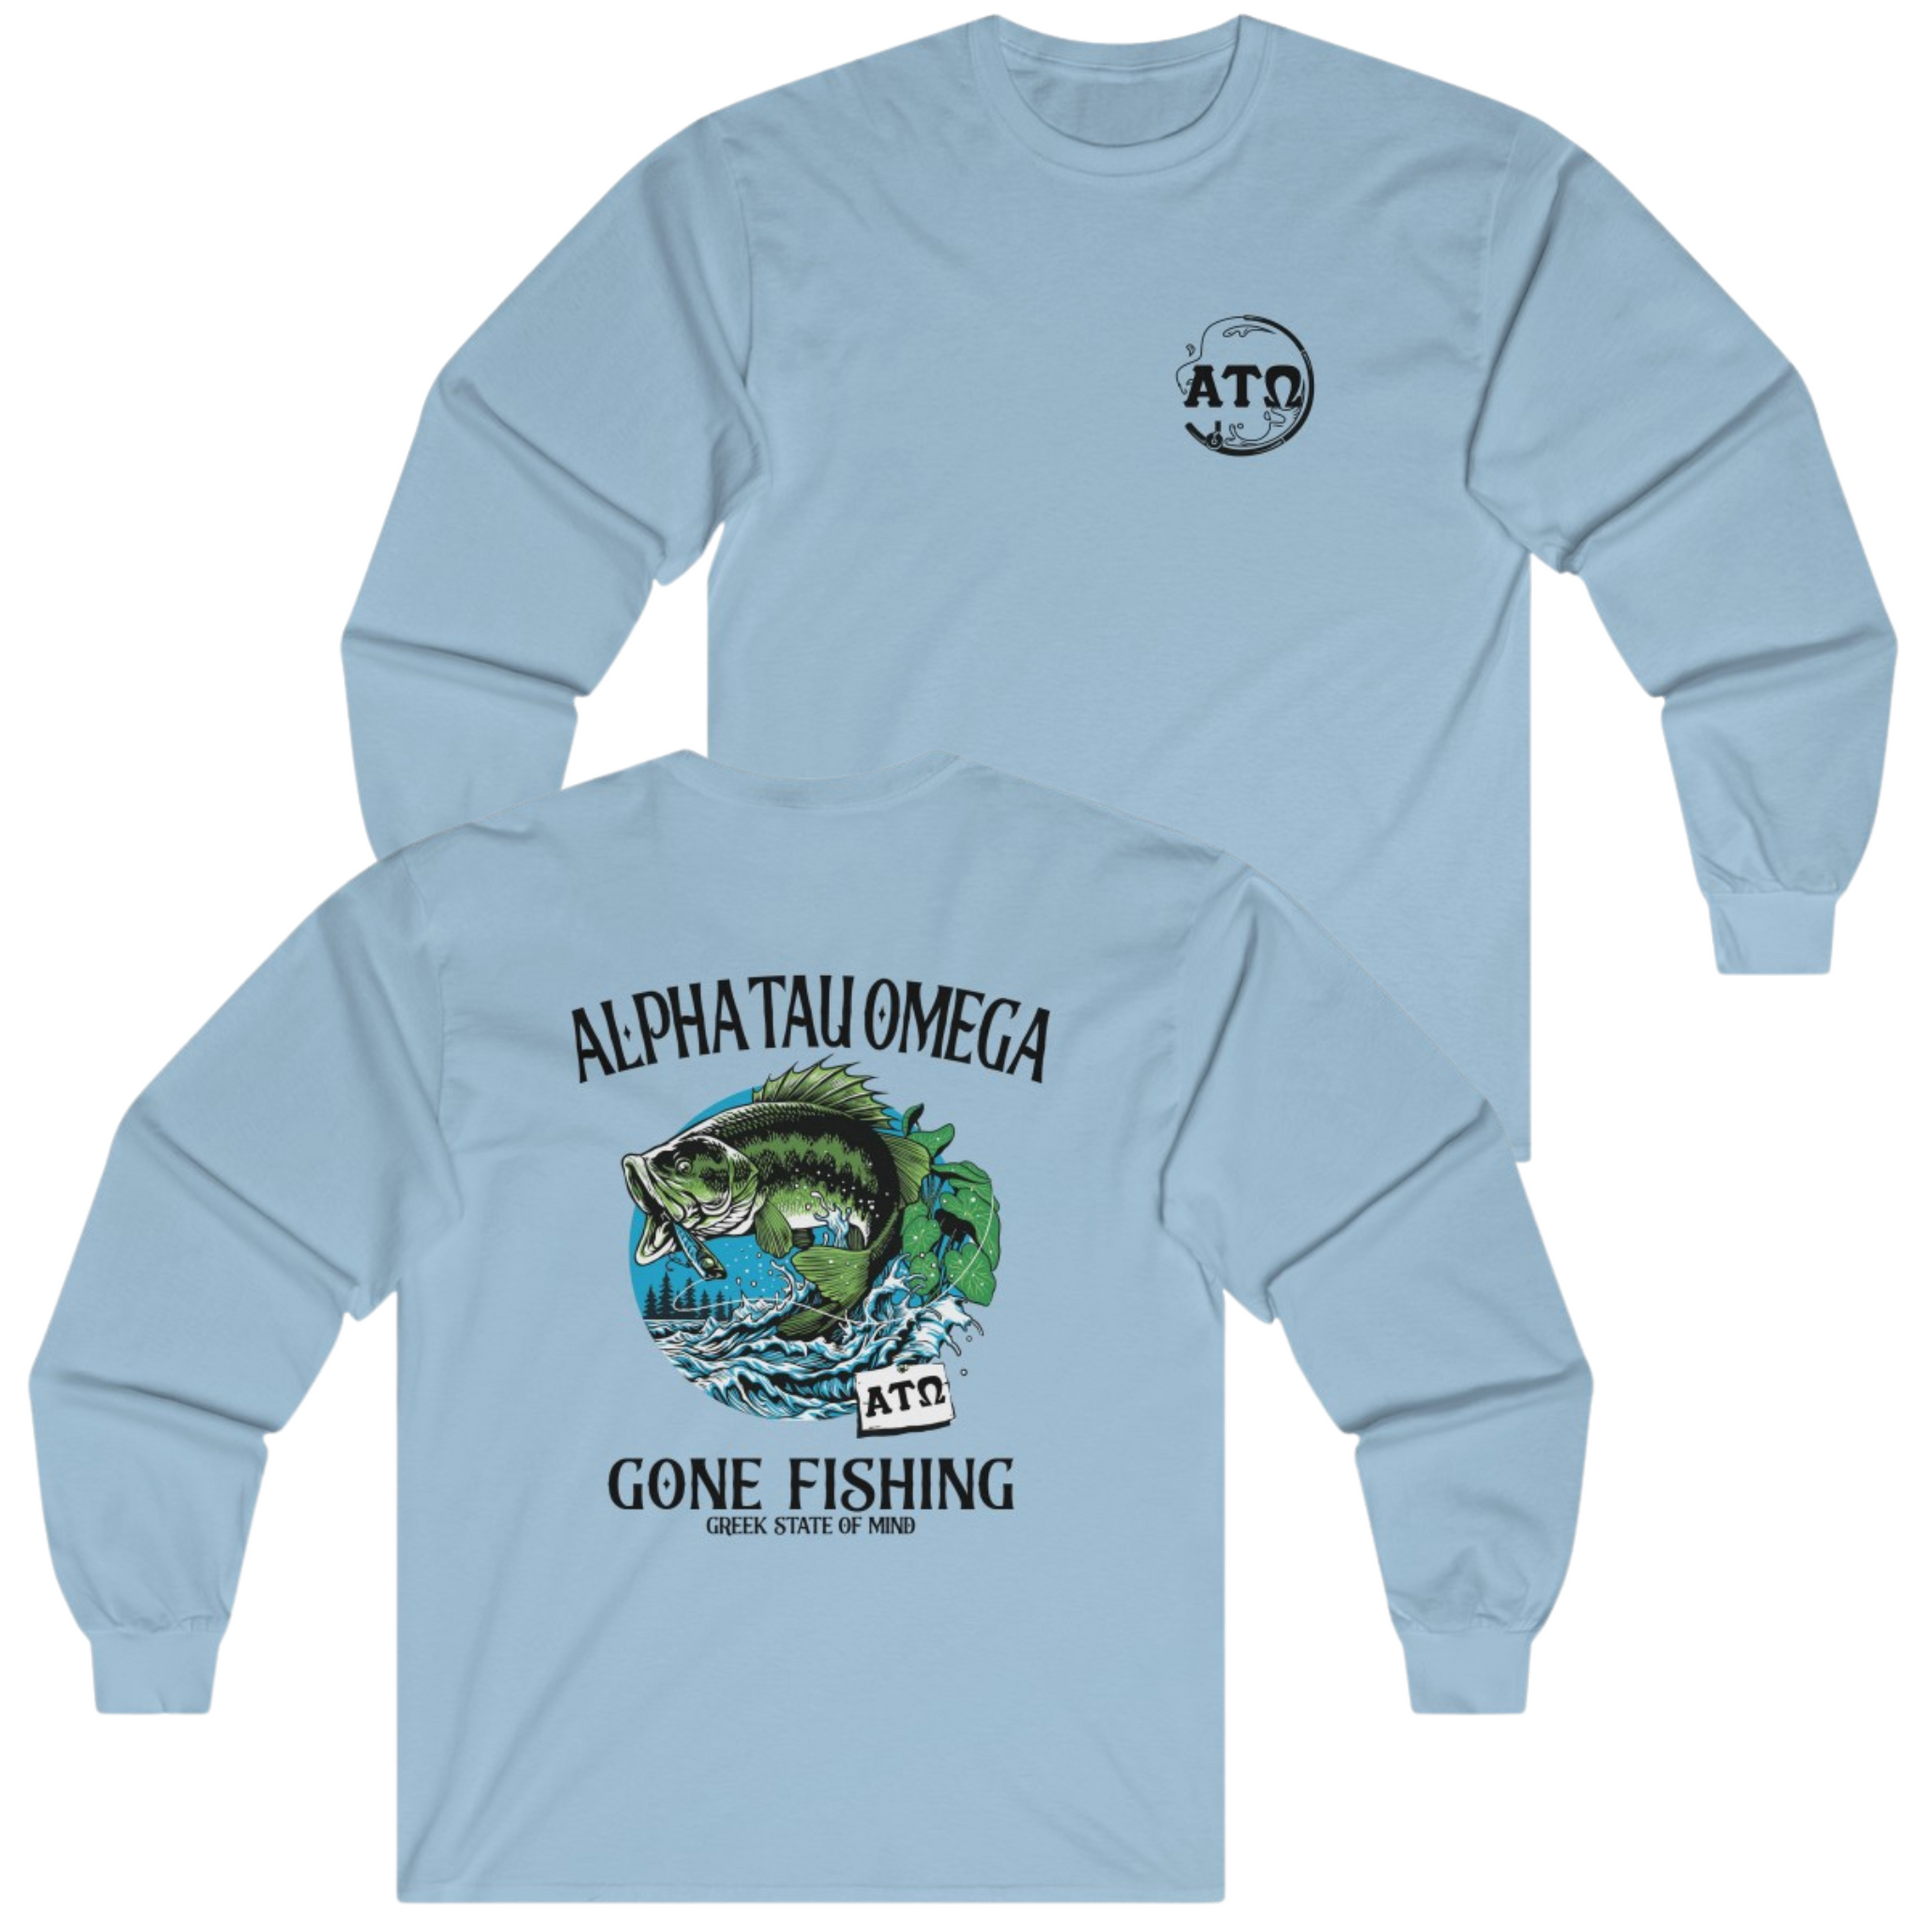 Light Blue Alpha Tau Omega Graphic Long Sleeve T-Shirt | Gone Fishing | Alpha Tau Omega Fraternity Merch 